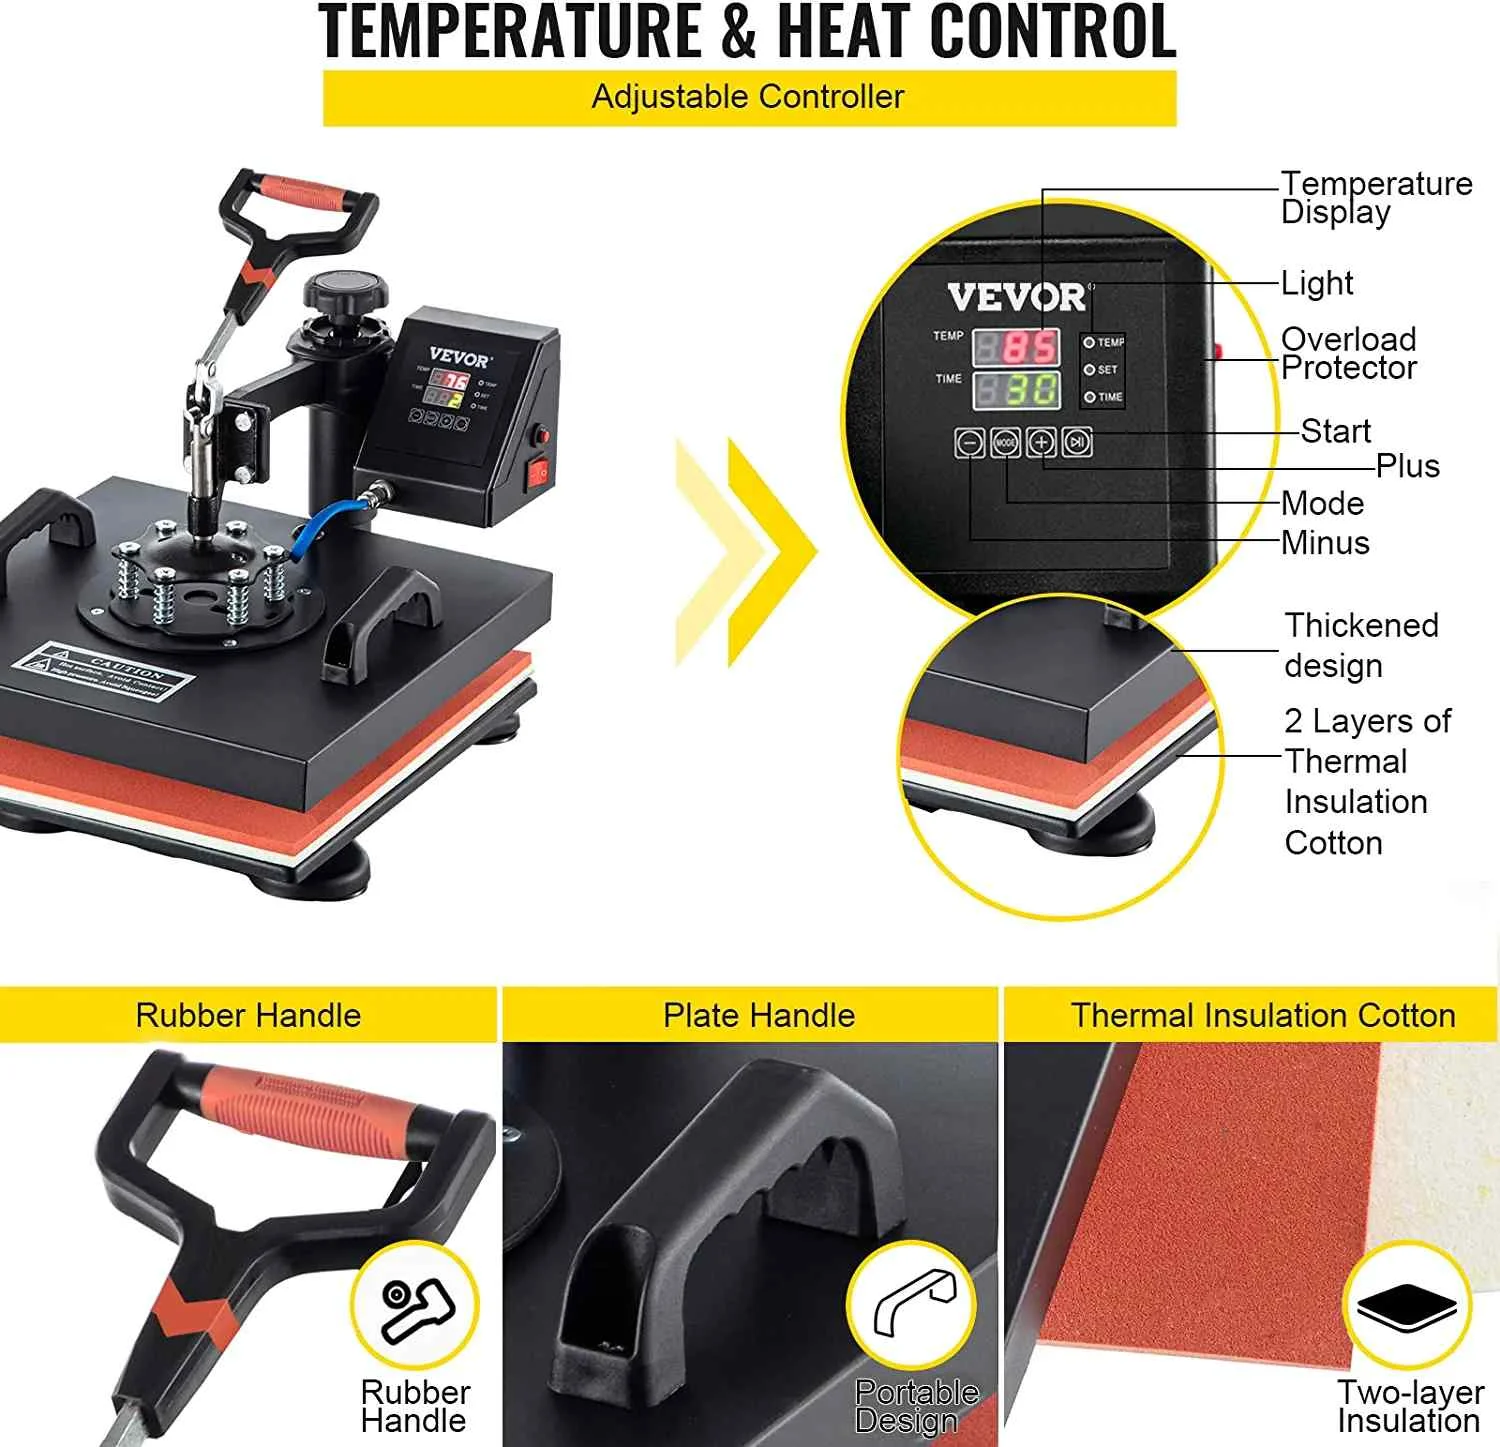 Vevor heat press machine key feature